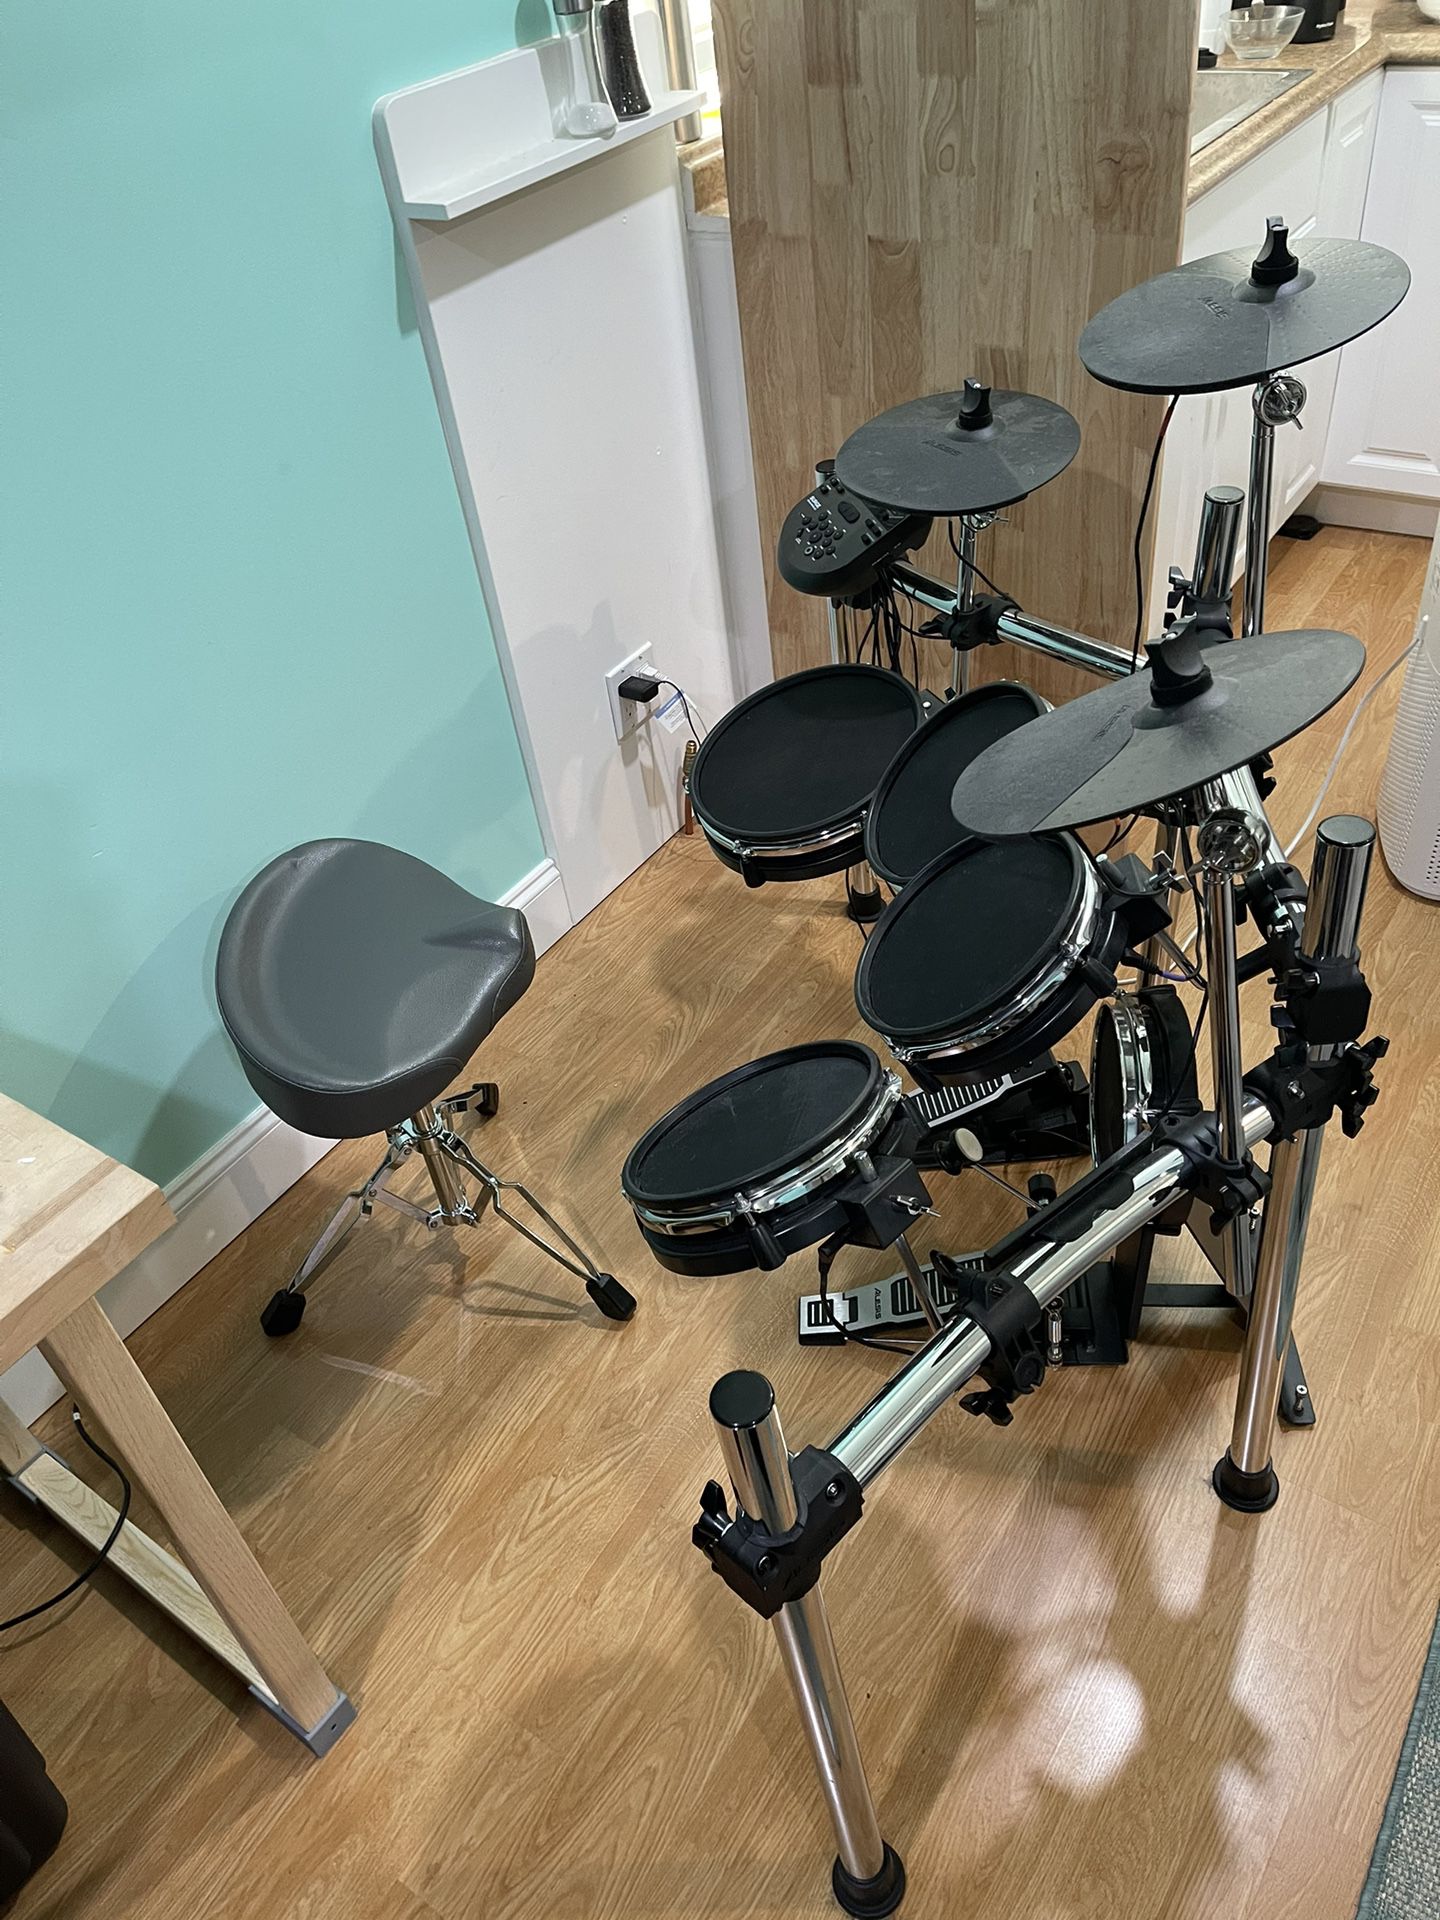 Alesis Drums Surge Mesh Kit - Includes Free Drum Seat